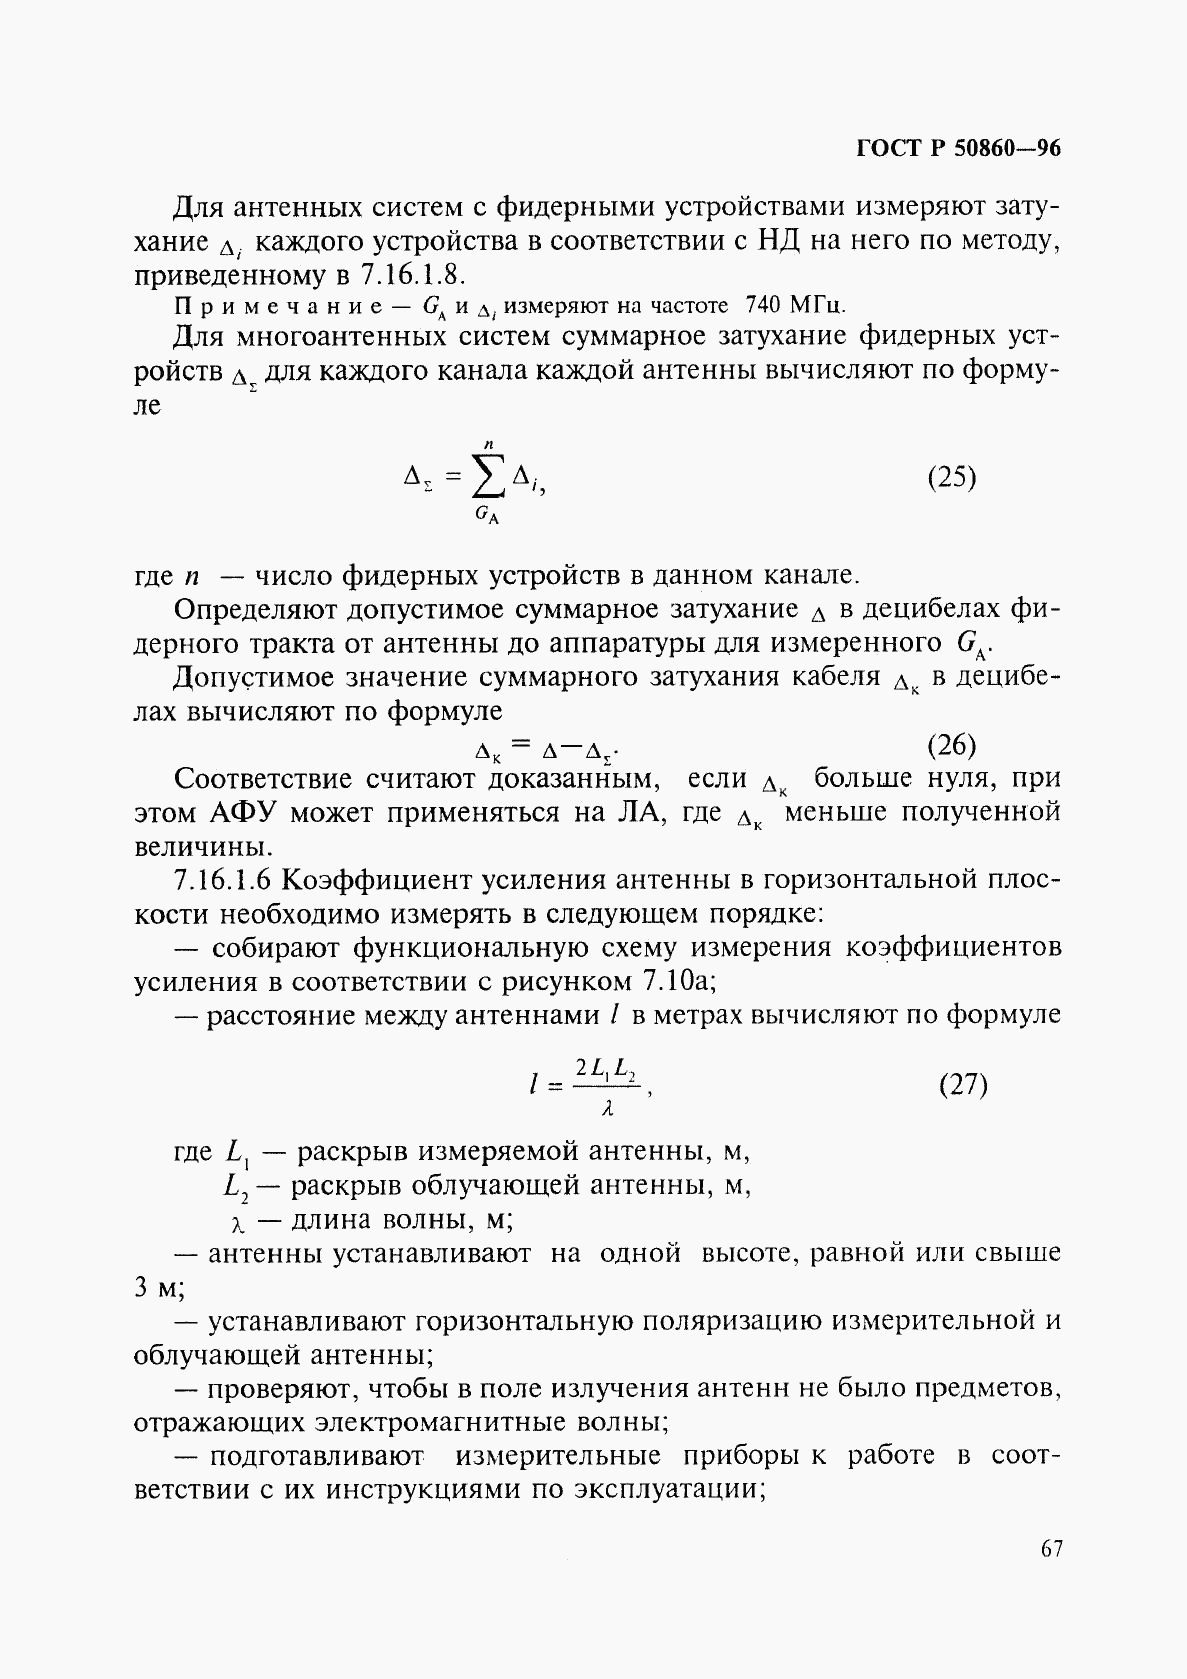 ГОСТ Р 50860-96, страница 72